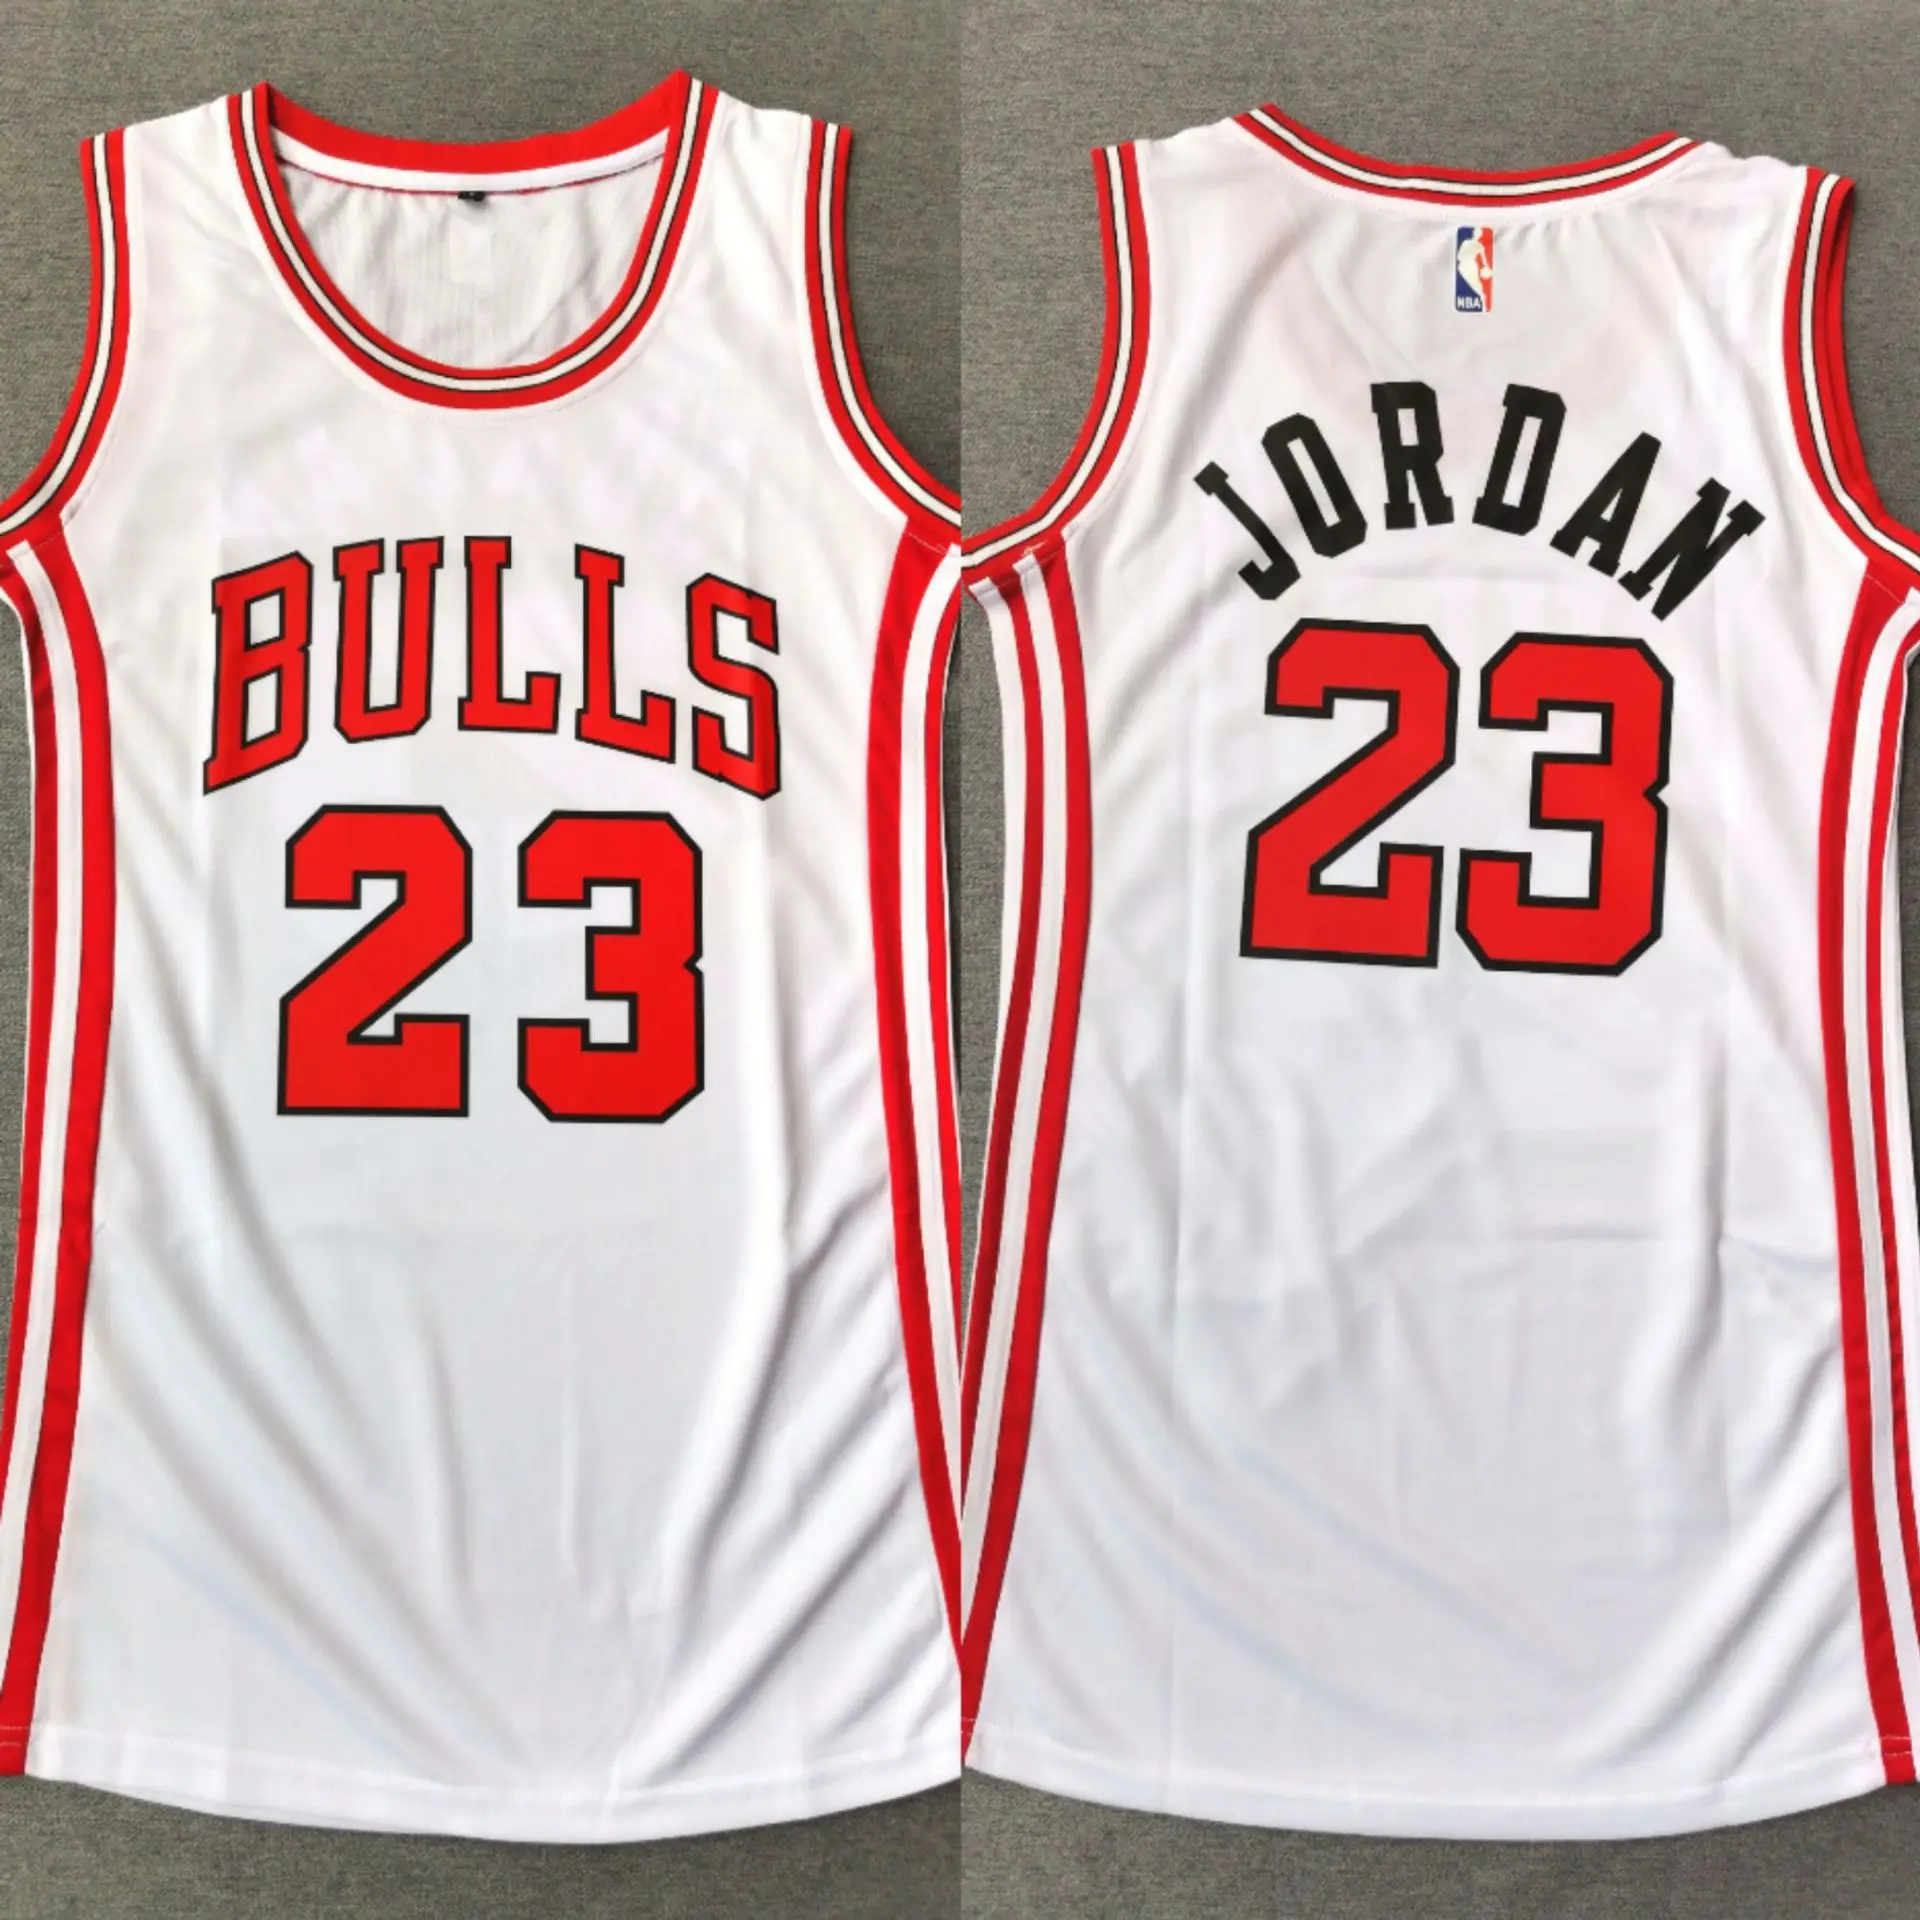 

Bull 23# jor dan women basketball dress jersey hot pressured polyester breathable quick dry womens basketball wear